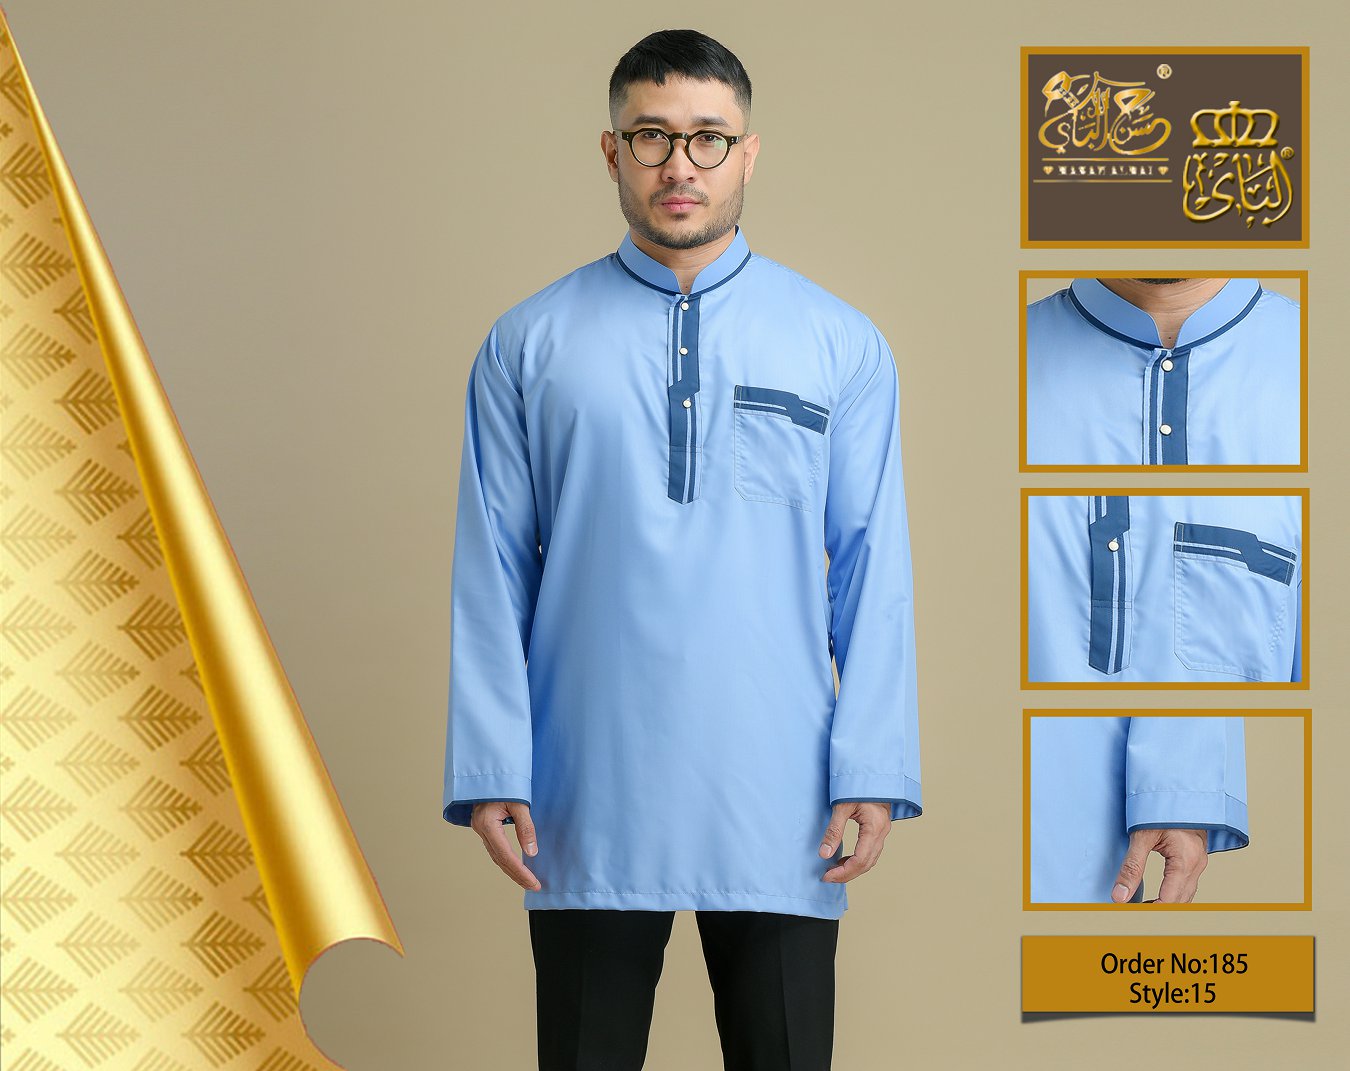 Malay clothing62